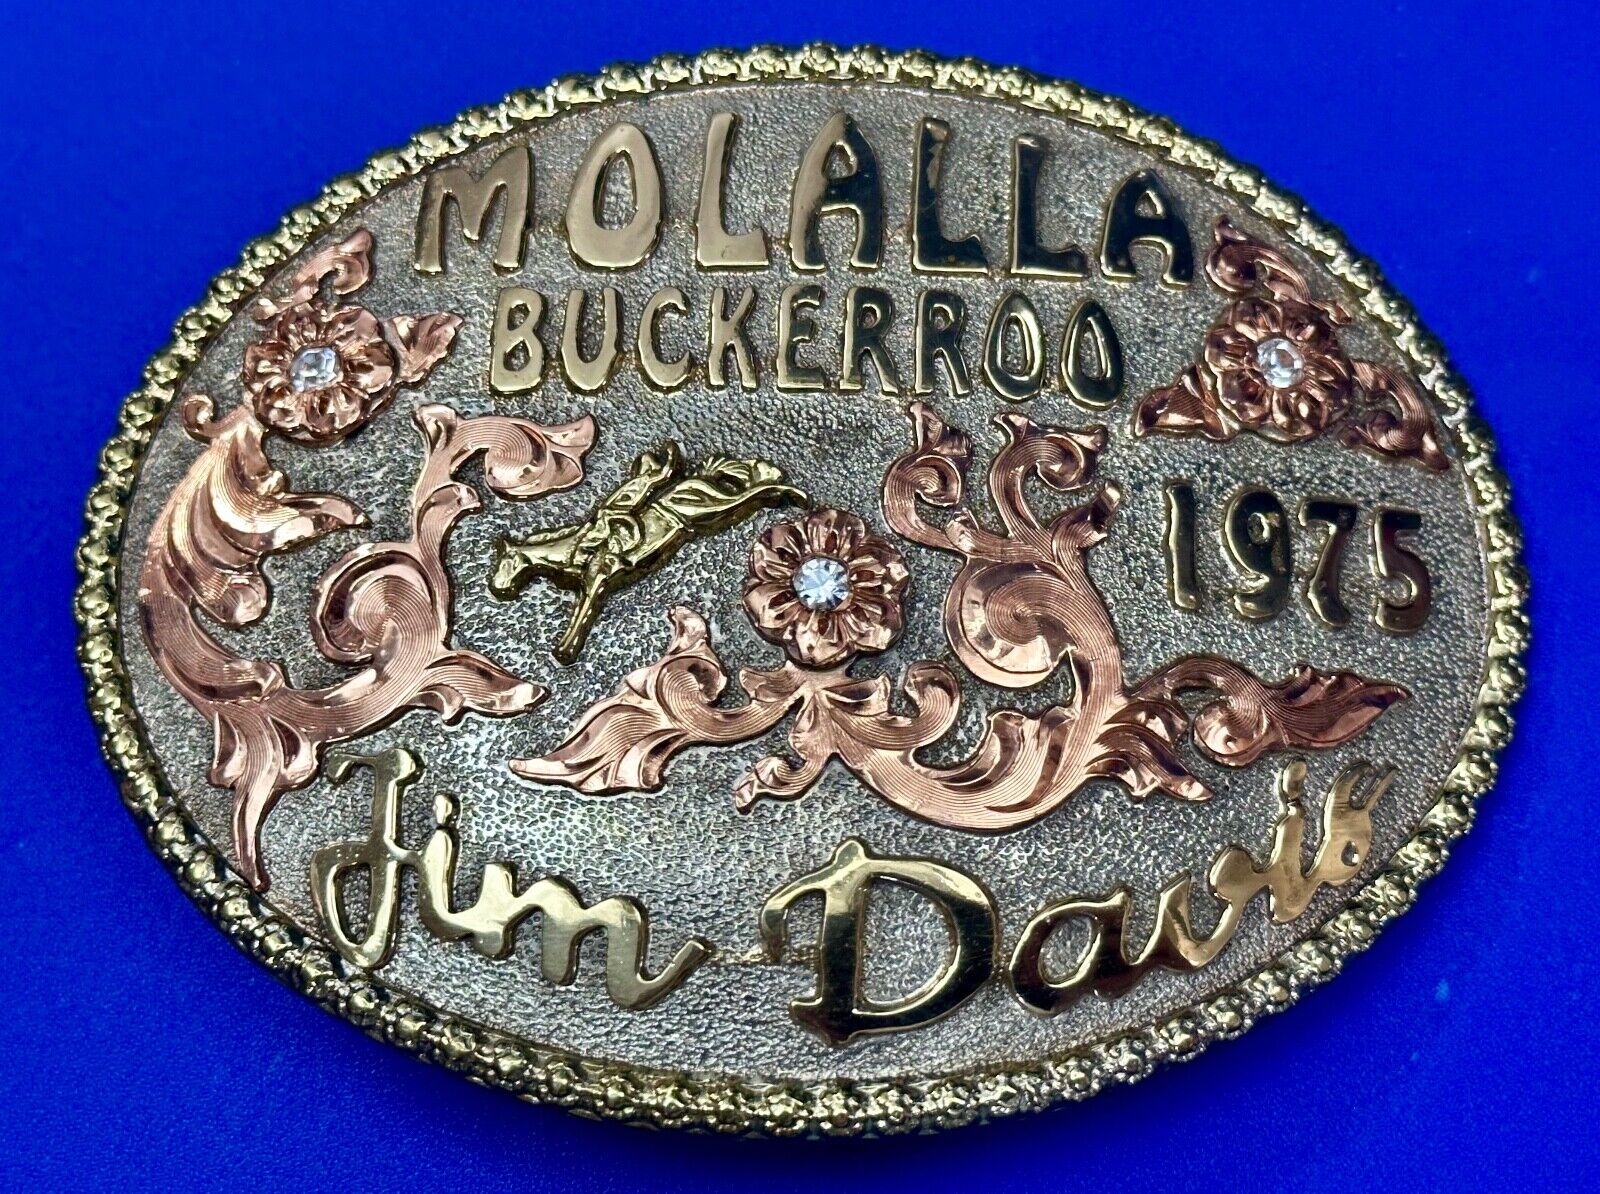 Molalla Buckeroo 1975 Jim Davis trophy award belt buckle by Tres Rios Silver